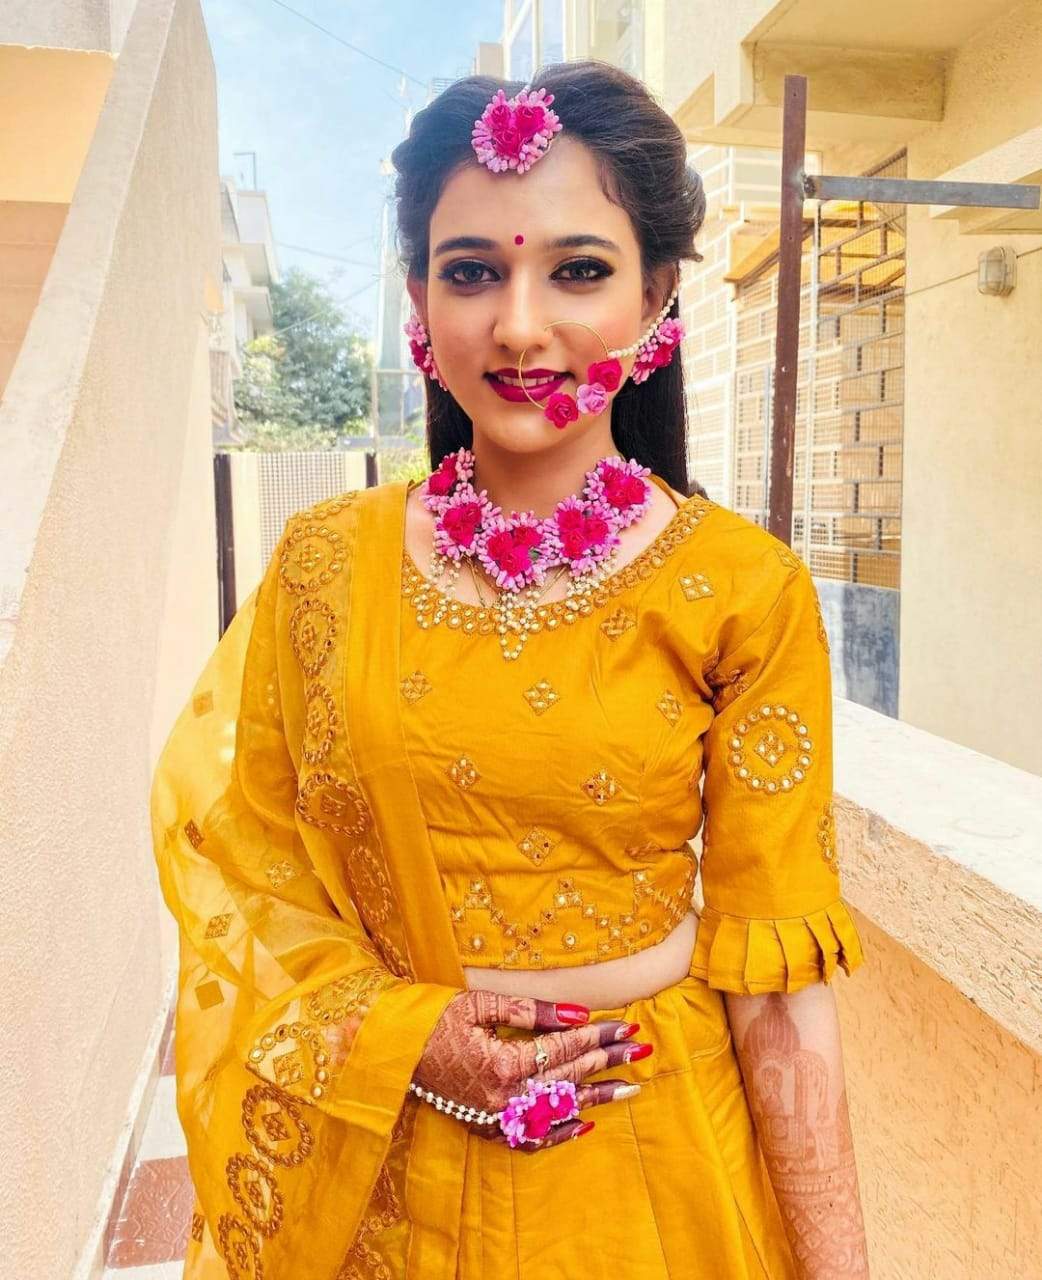 Big Yellow Traditional Jhumka Earrings for Girls by FashionCrab